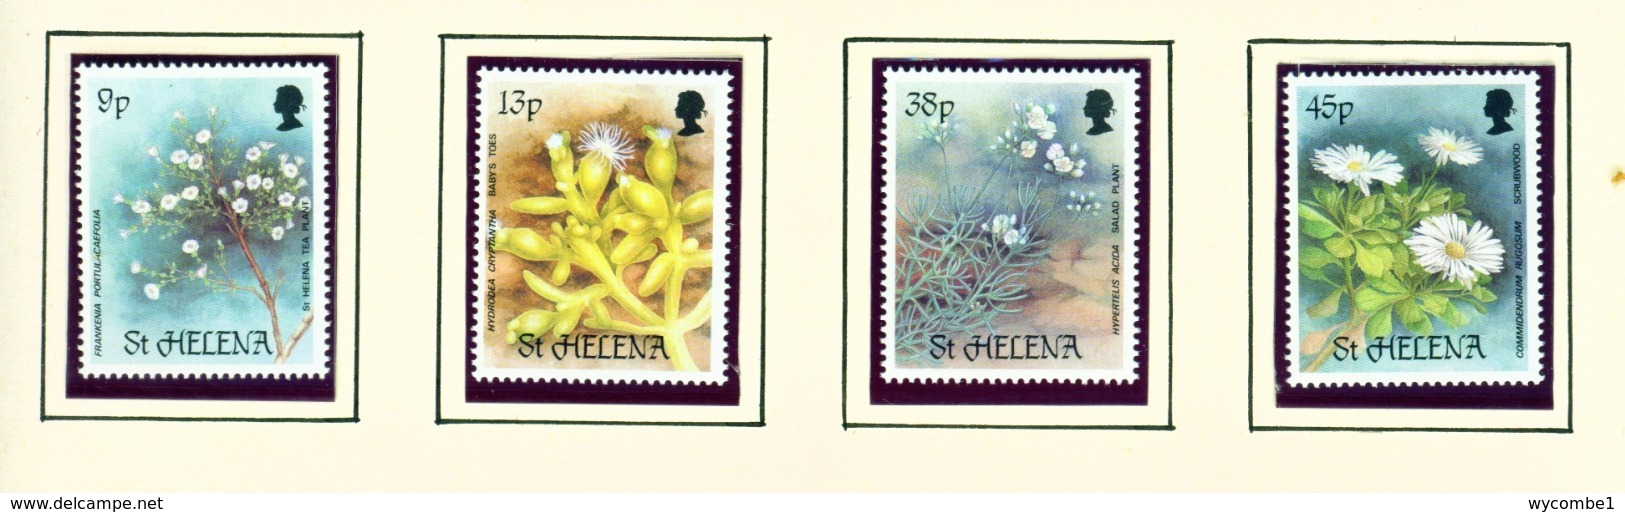 ST HELENA - 1987 Rare Plants Set Unmounted/Never Hinged Mint - Saint Helena Island